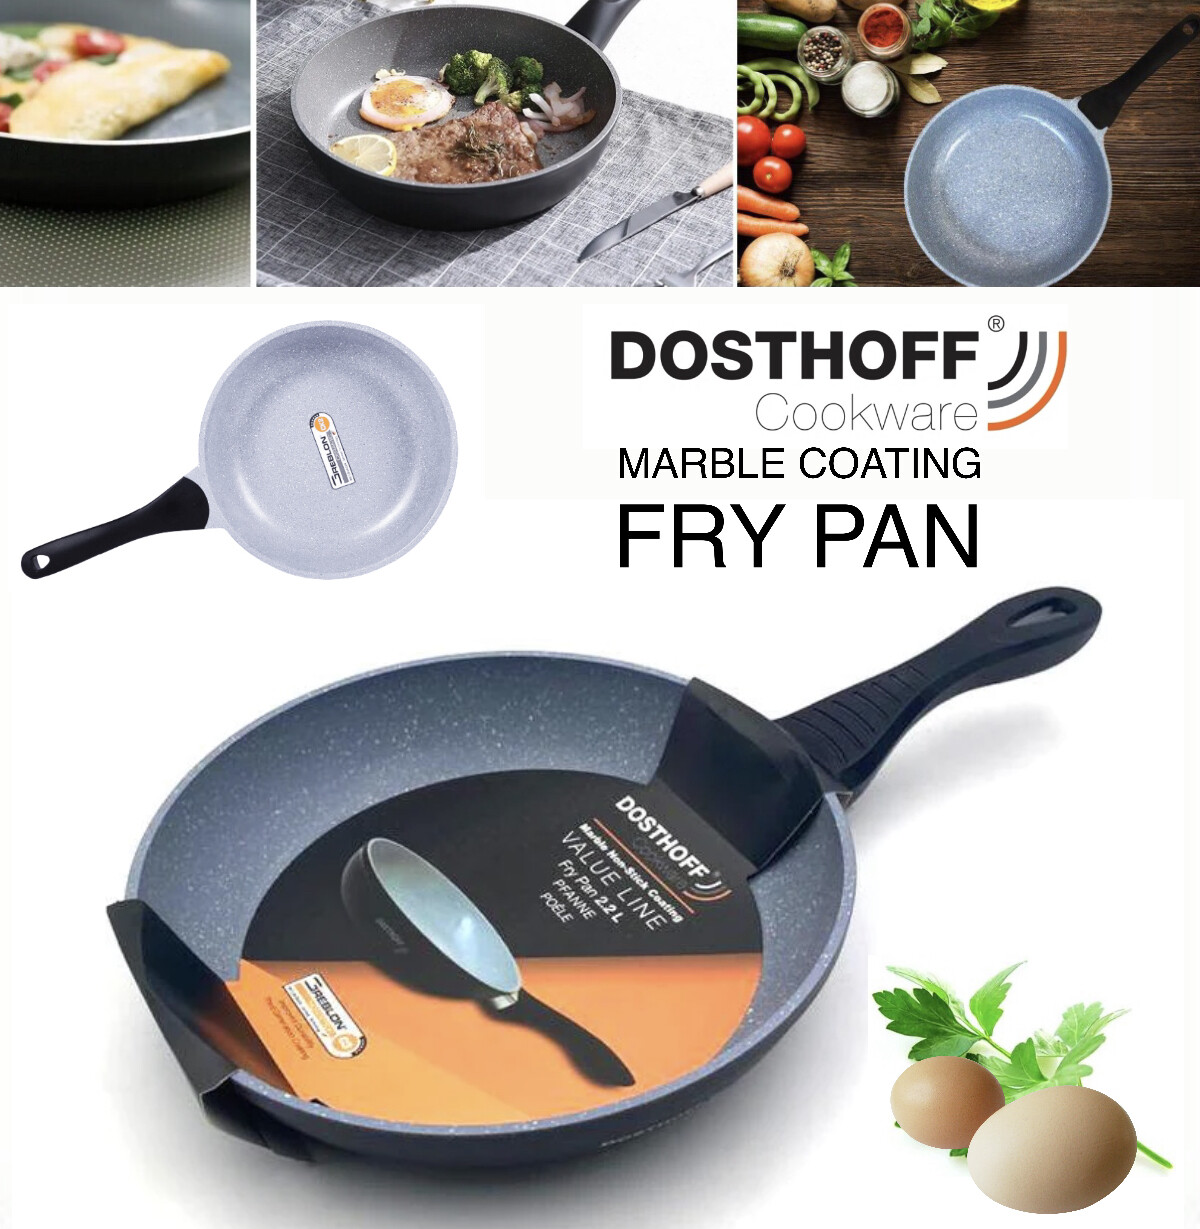 DOSTHOFF Fry Pan